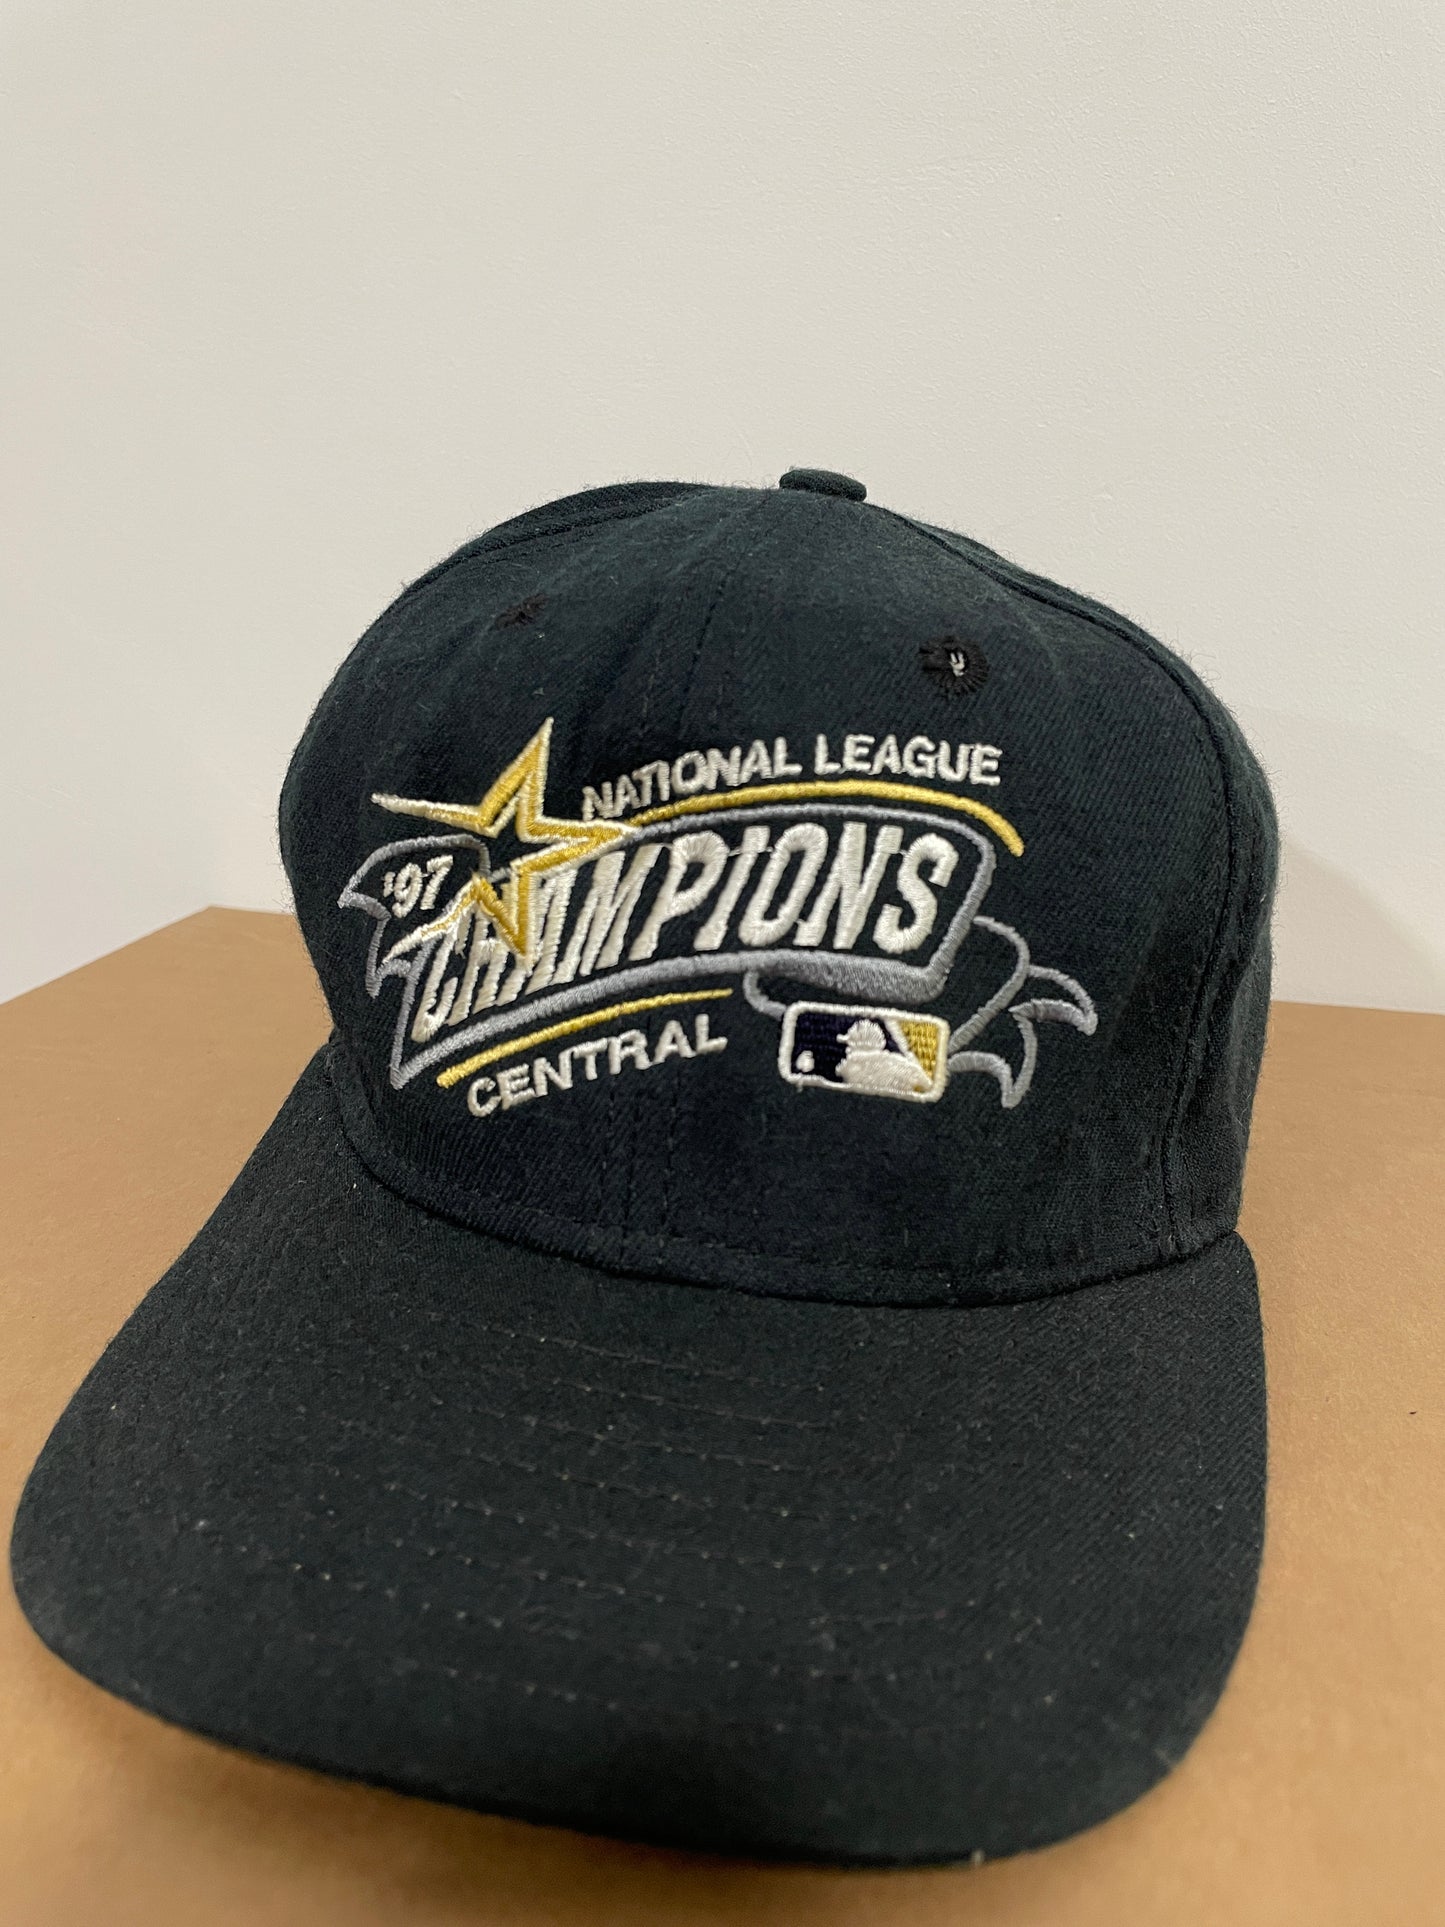 Cappello New Era MLB 1997 champions (C011)